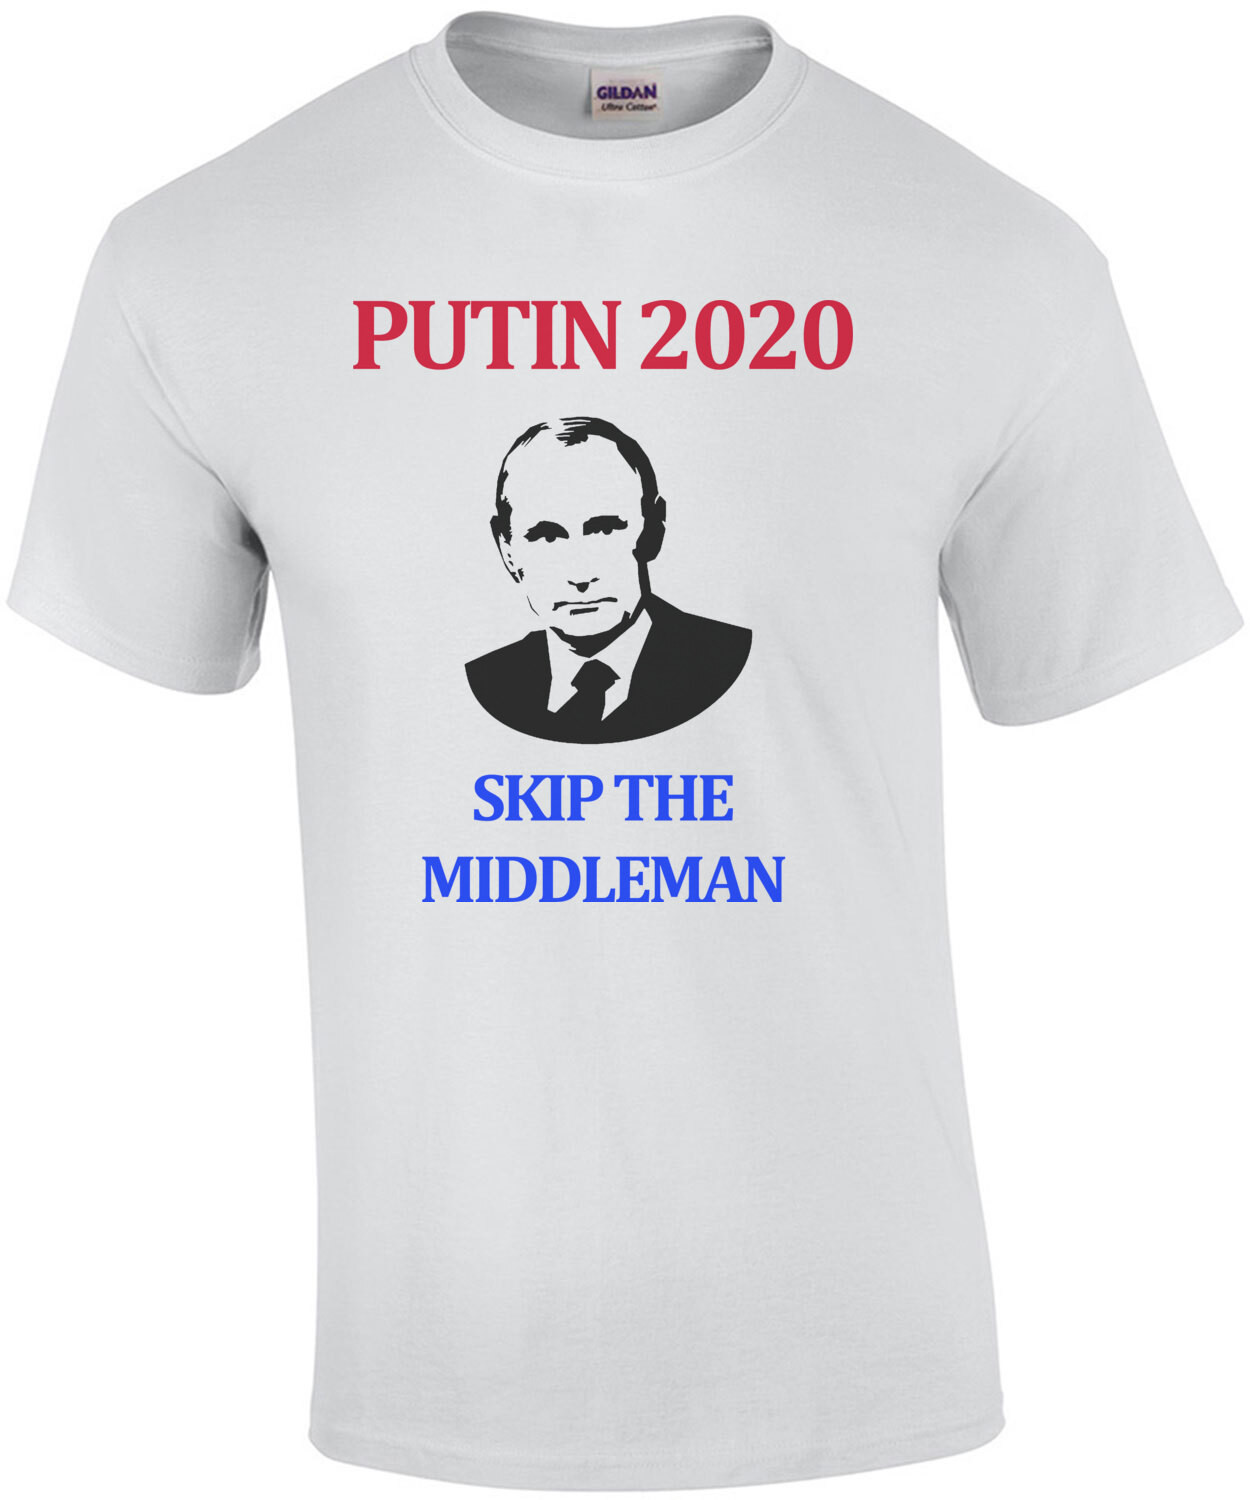 Putin 2020 Shirt